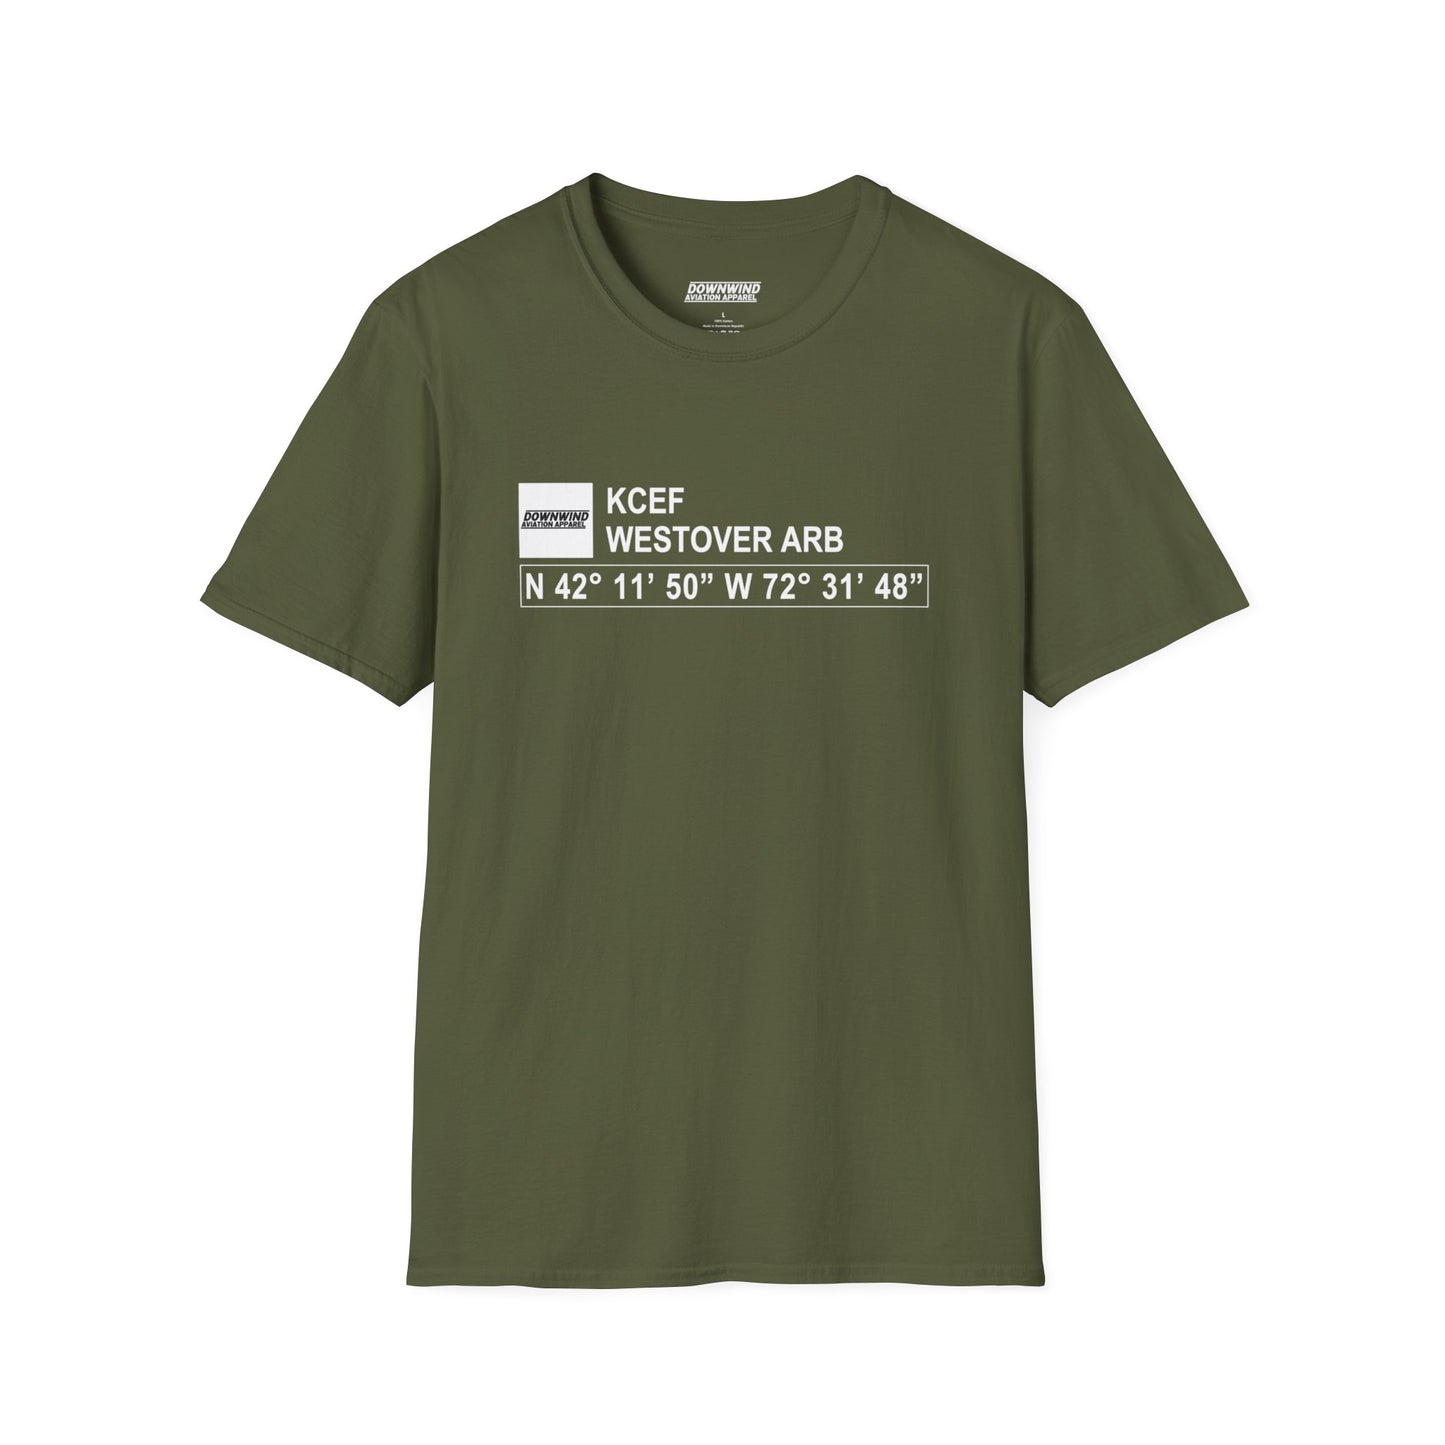 KCEF / Westover ARB T-Shirt